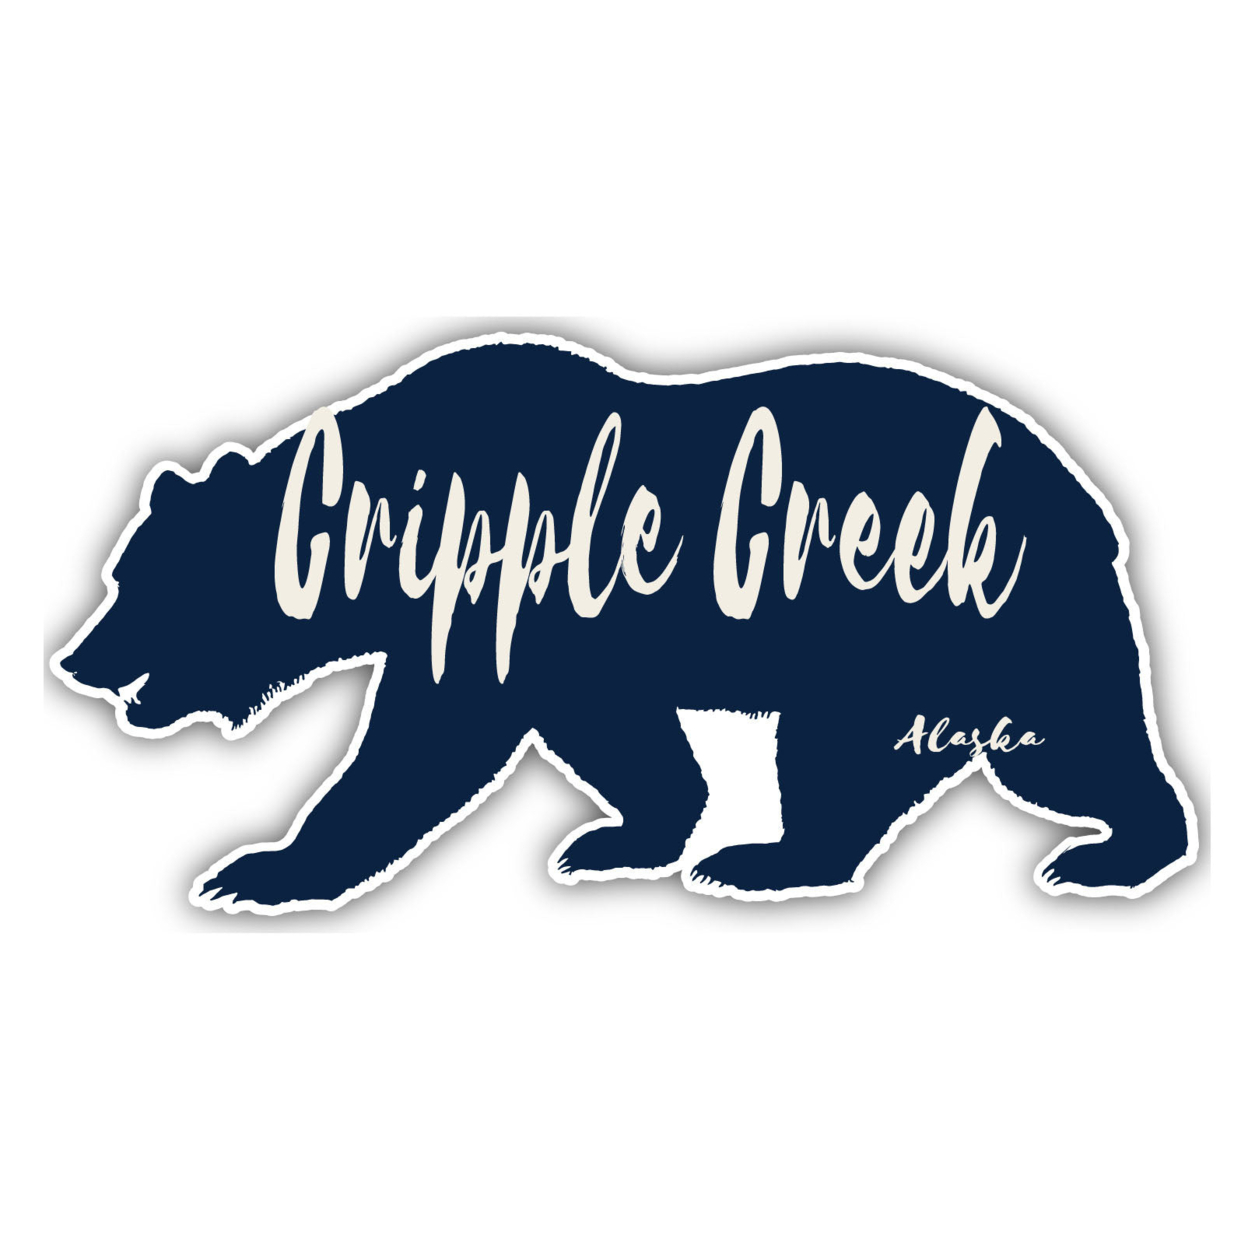 Cripple Creek Alaska Souvenir Decorative Stickers (Choose Theme And Size) - 4-Pack, 6-Inch, Bear